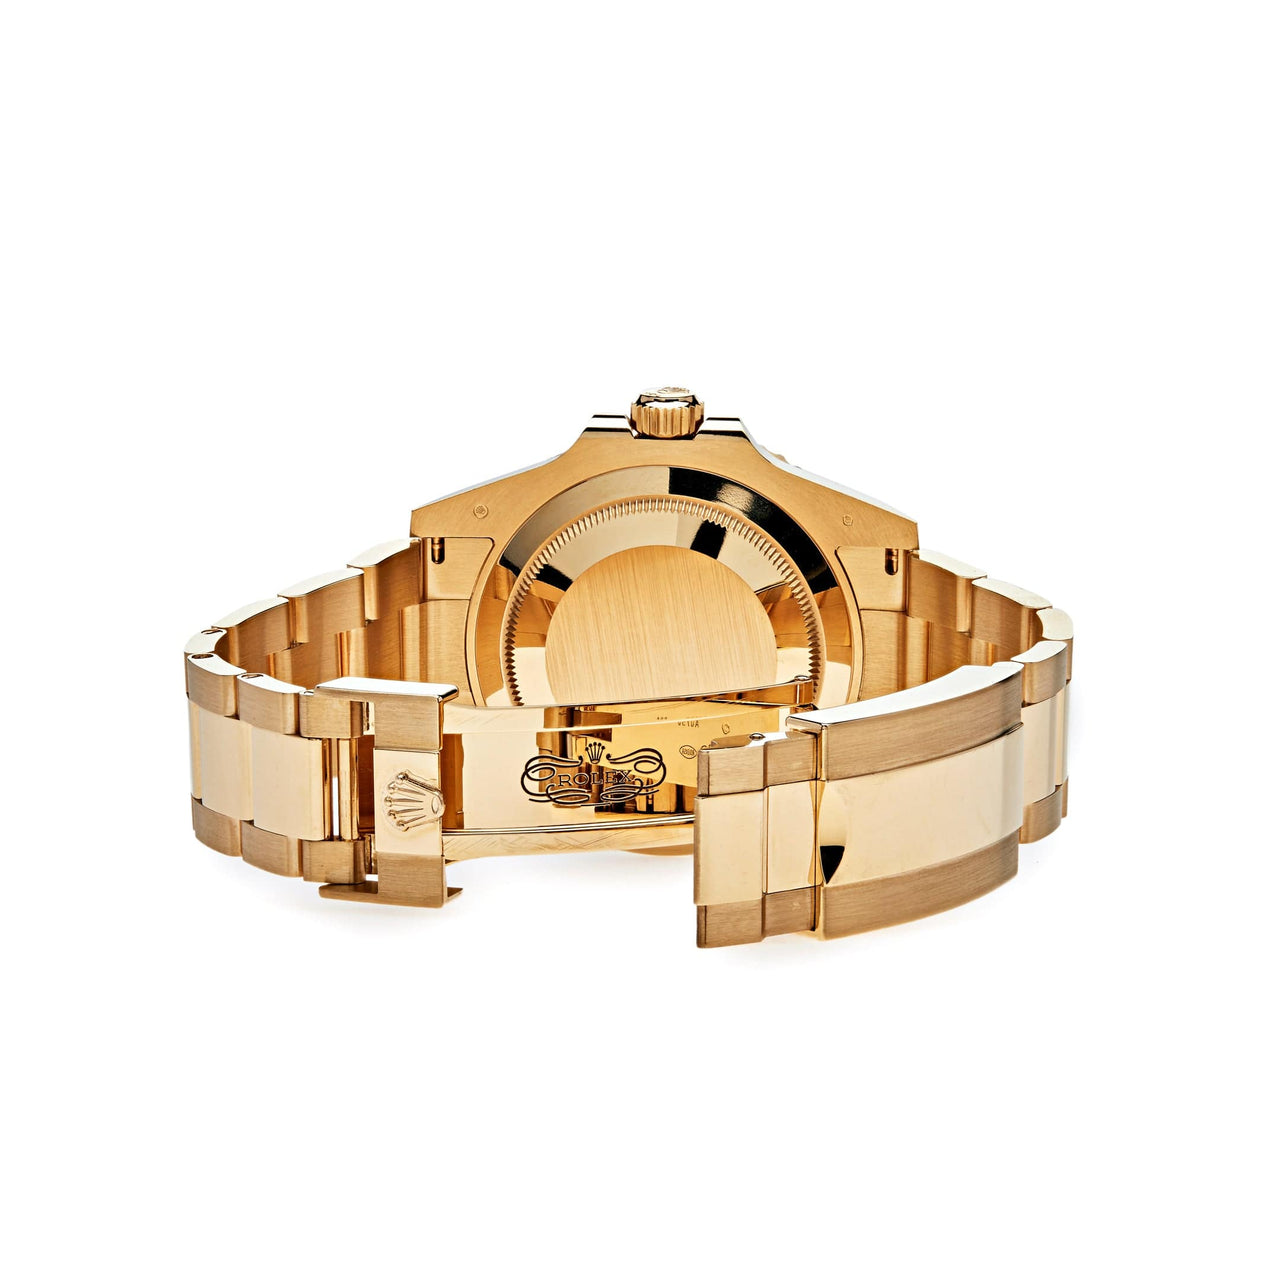 Luxury Watch Rolex Submariner Date Yellow Gold Black Dial 126618LN wrist aficionado